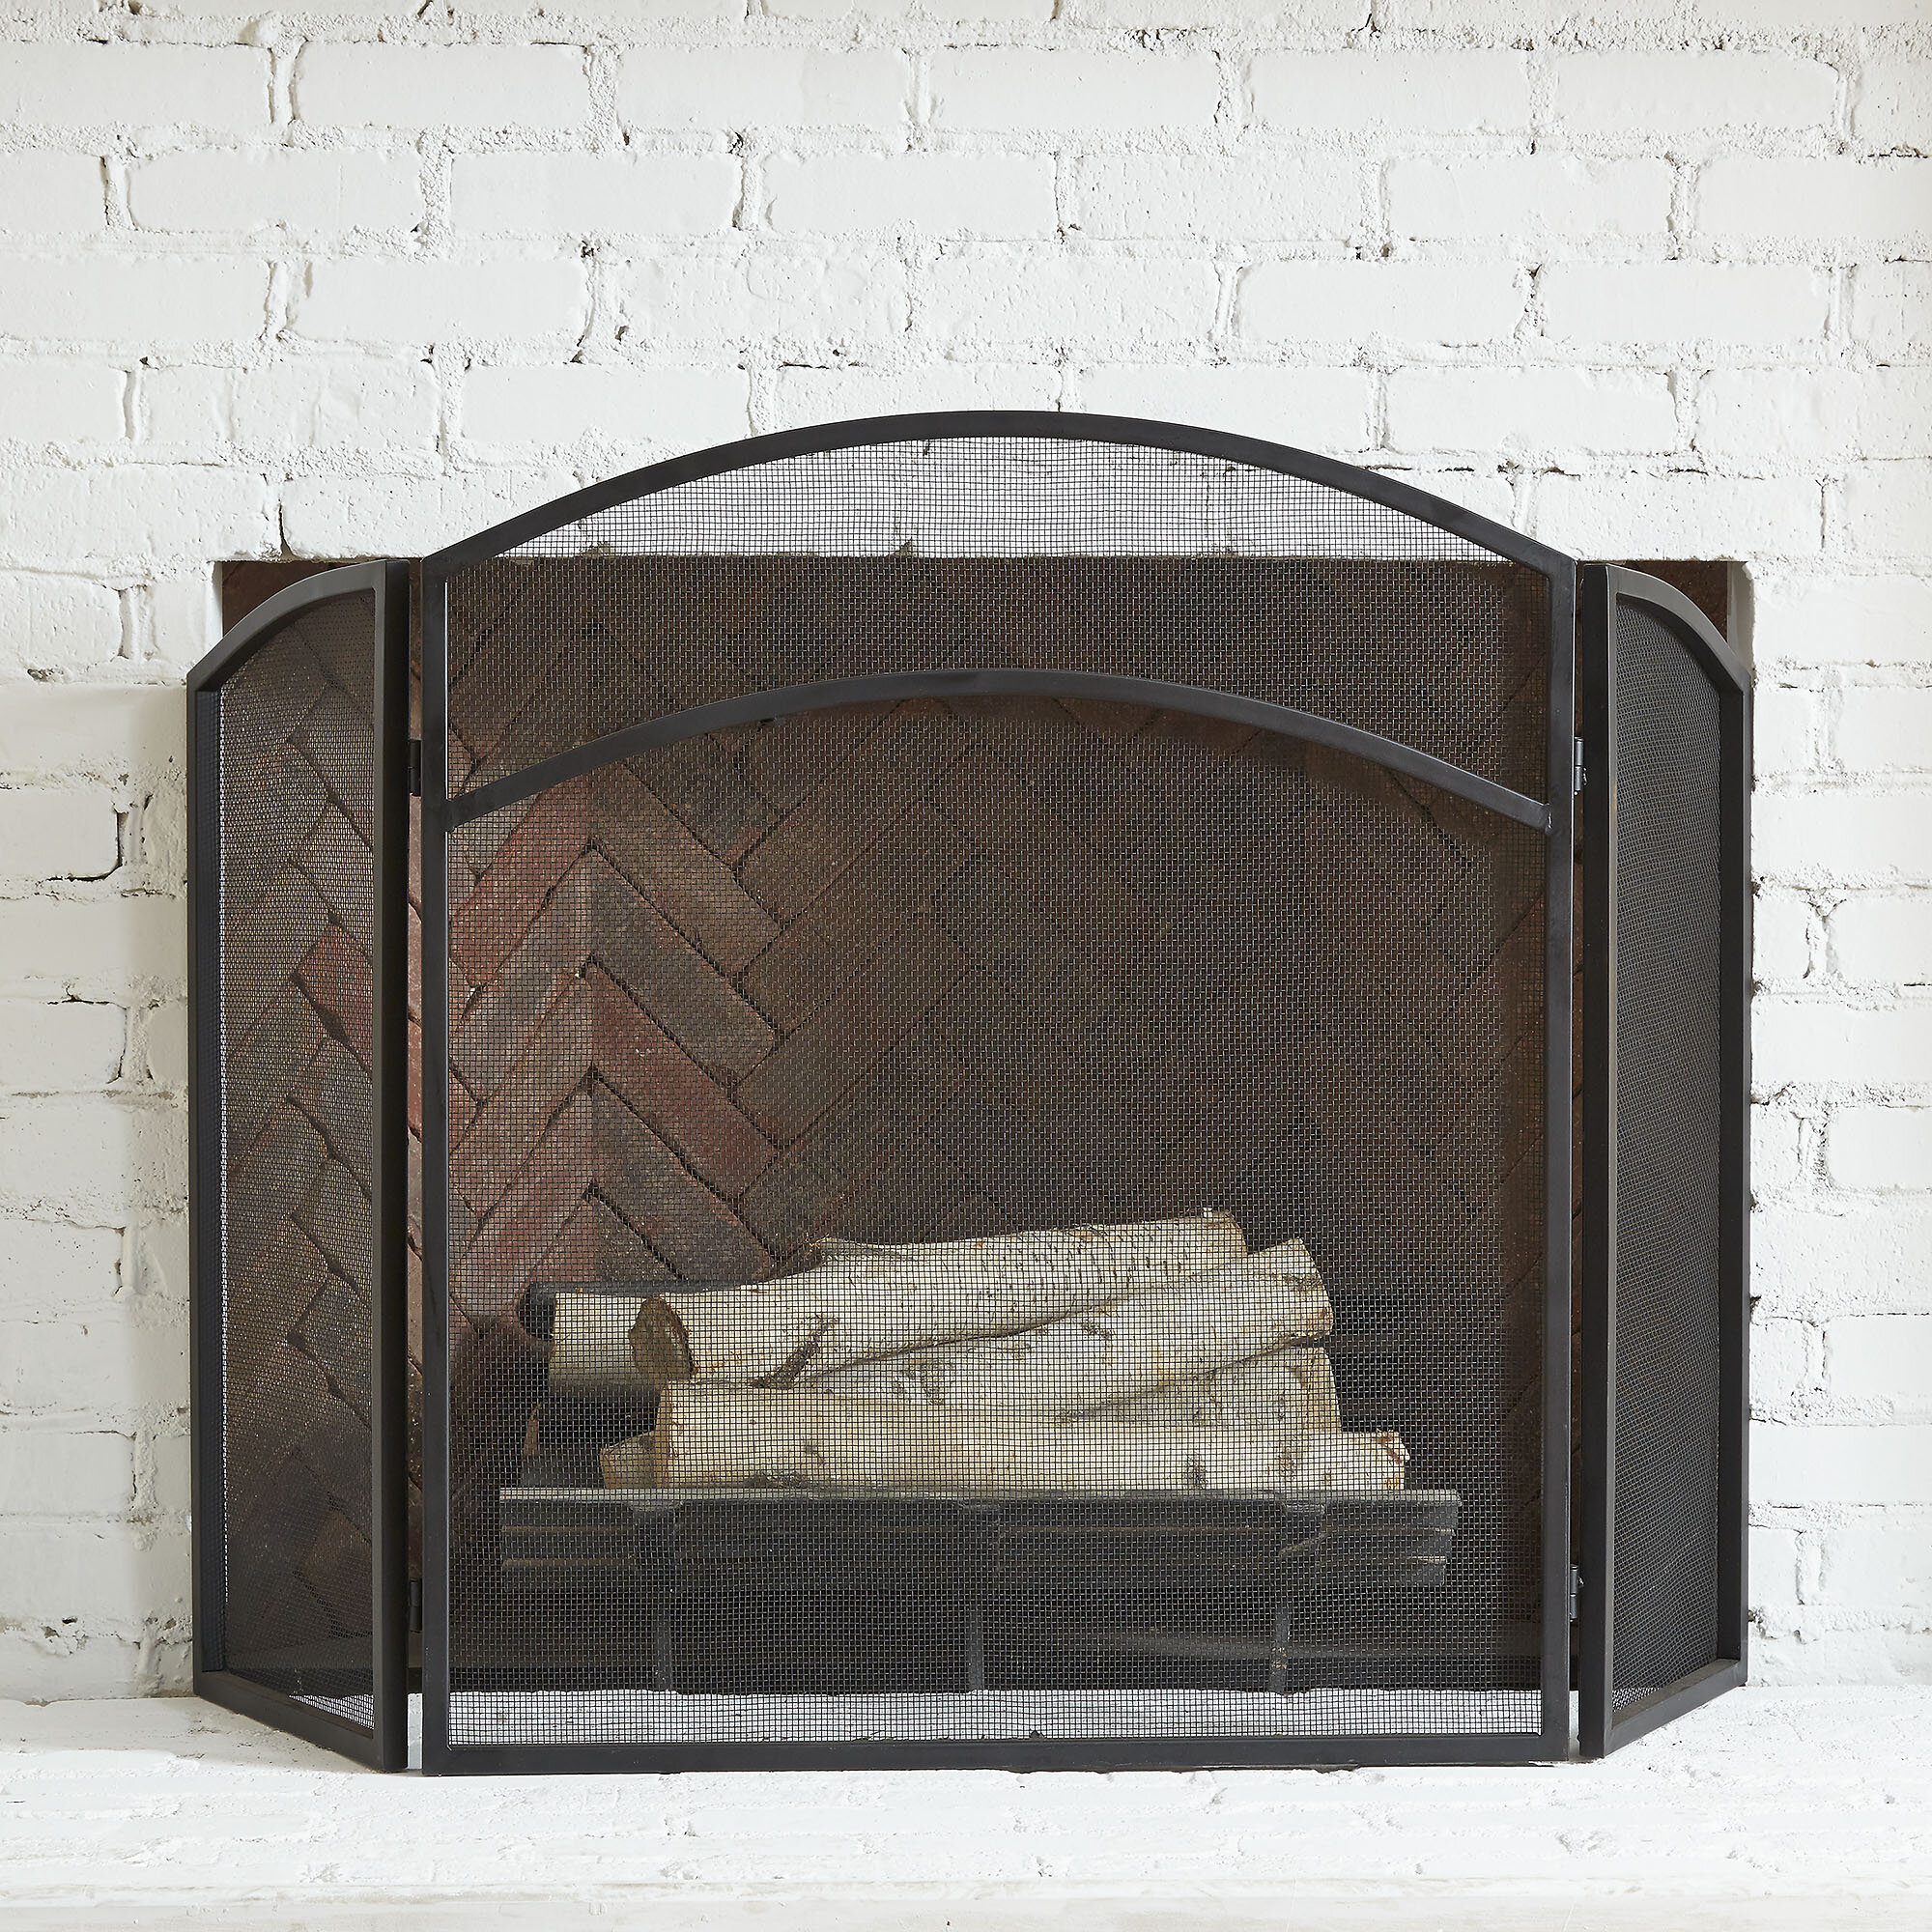 Details more than 129 decorative fireplace screens super hot - vova.edu.vn